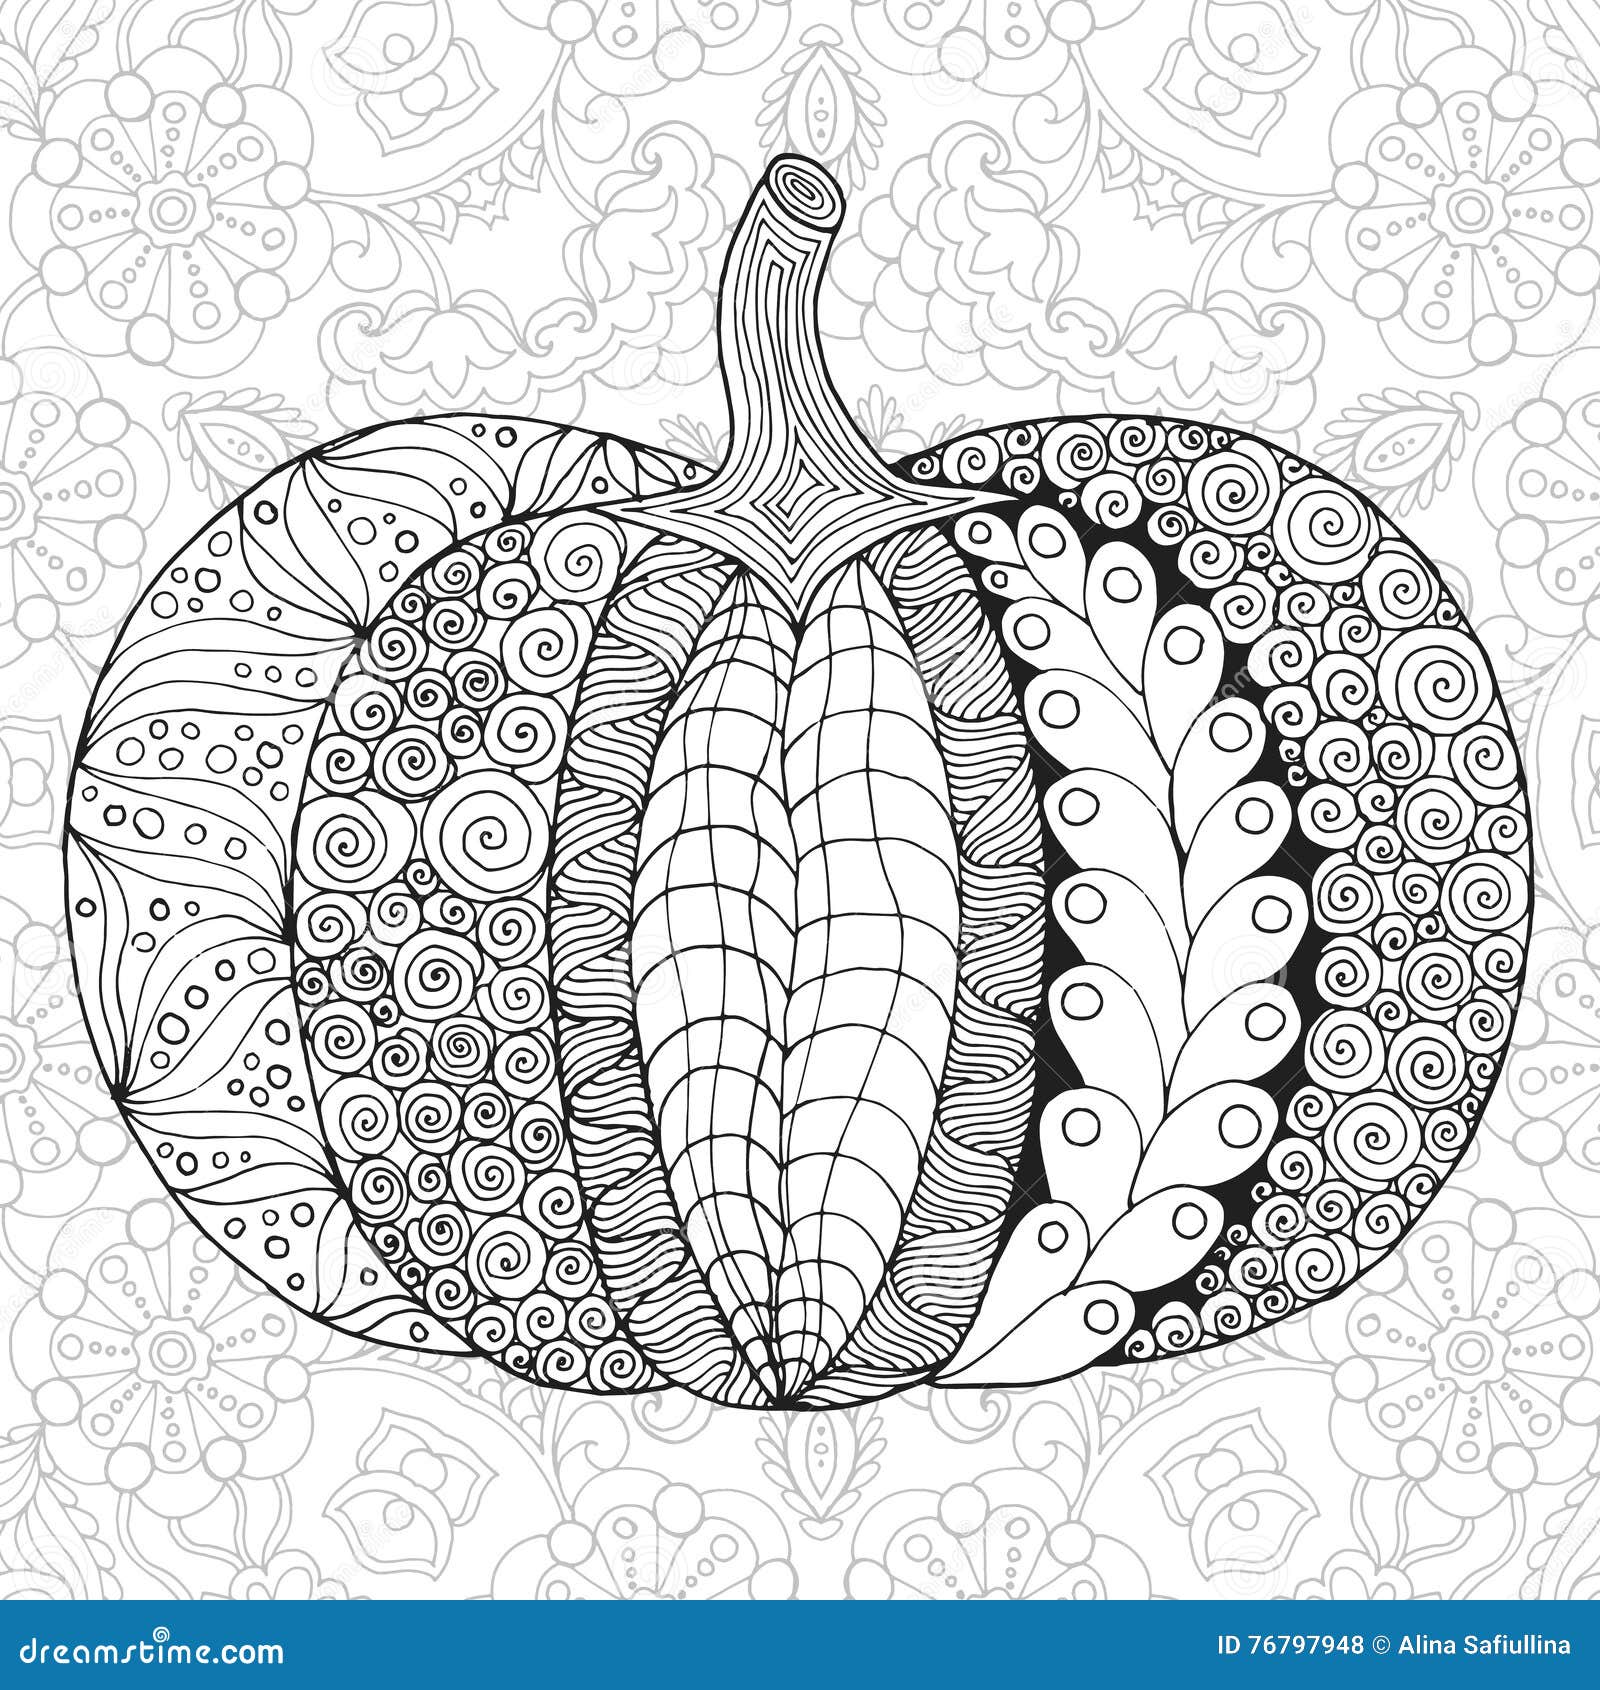 Zentangle pumpkin stock illustrations â zentangle pumpkin stock illustrations vectors clipart